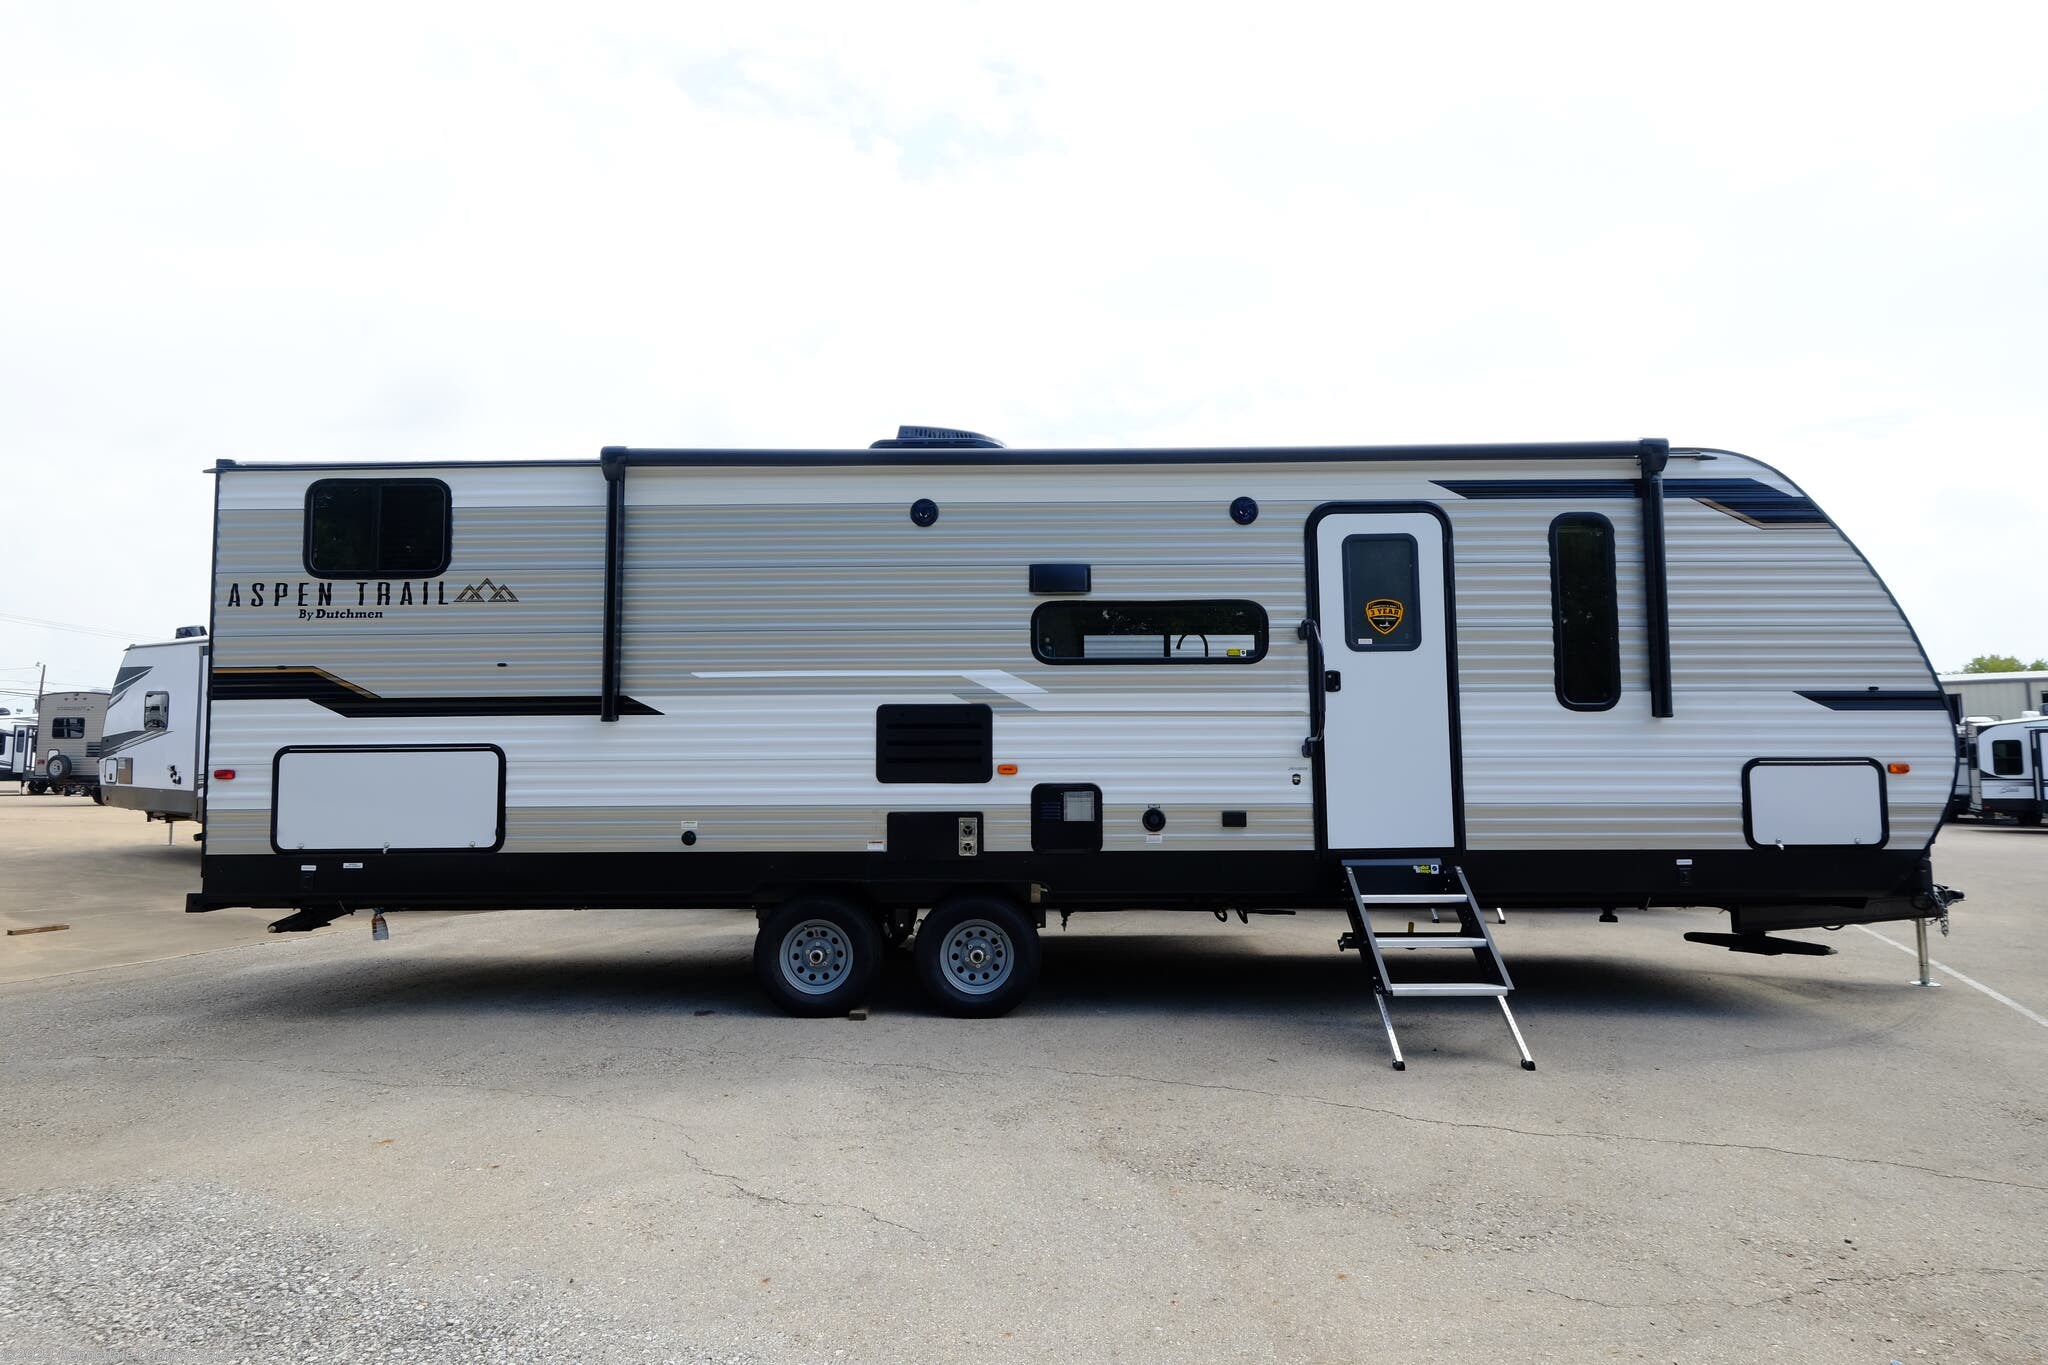 2021 Dutchmen Aspen Trail 2910BHS RV for Sale in Kennedale, TX 76060